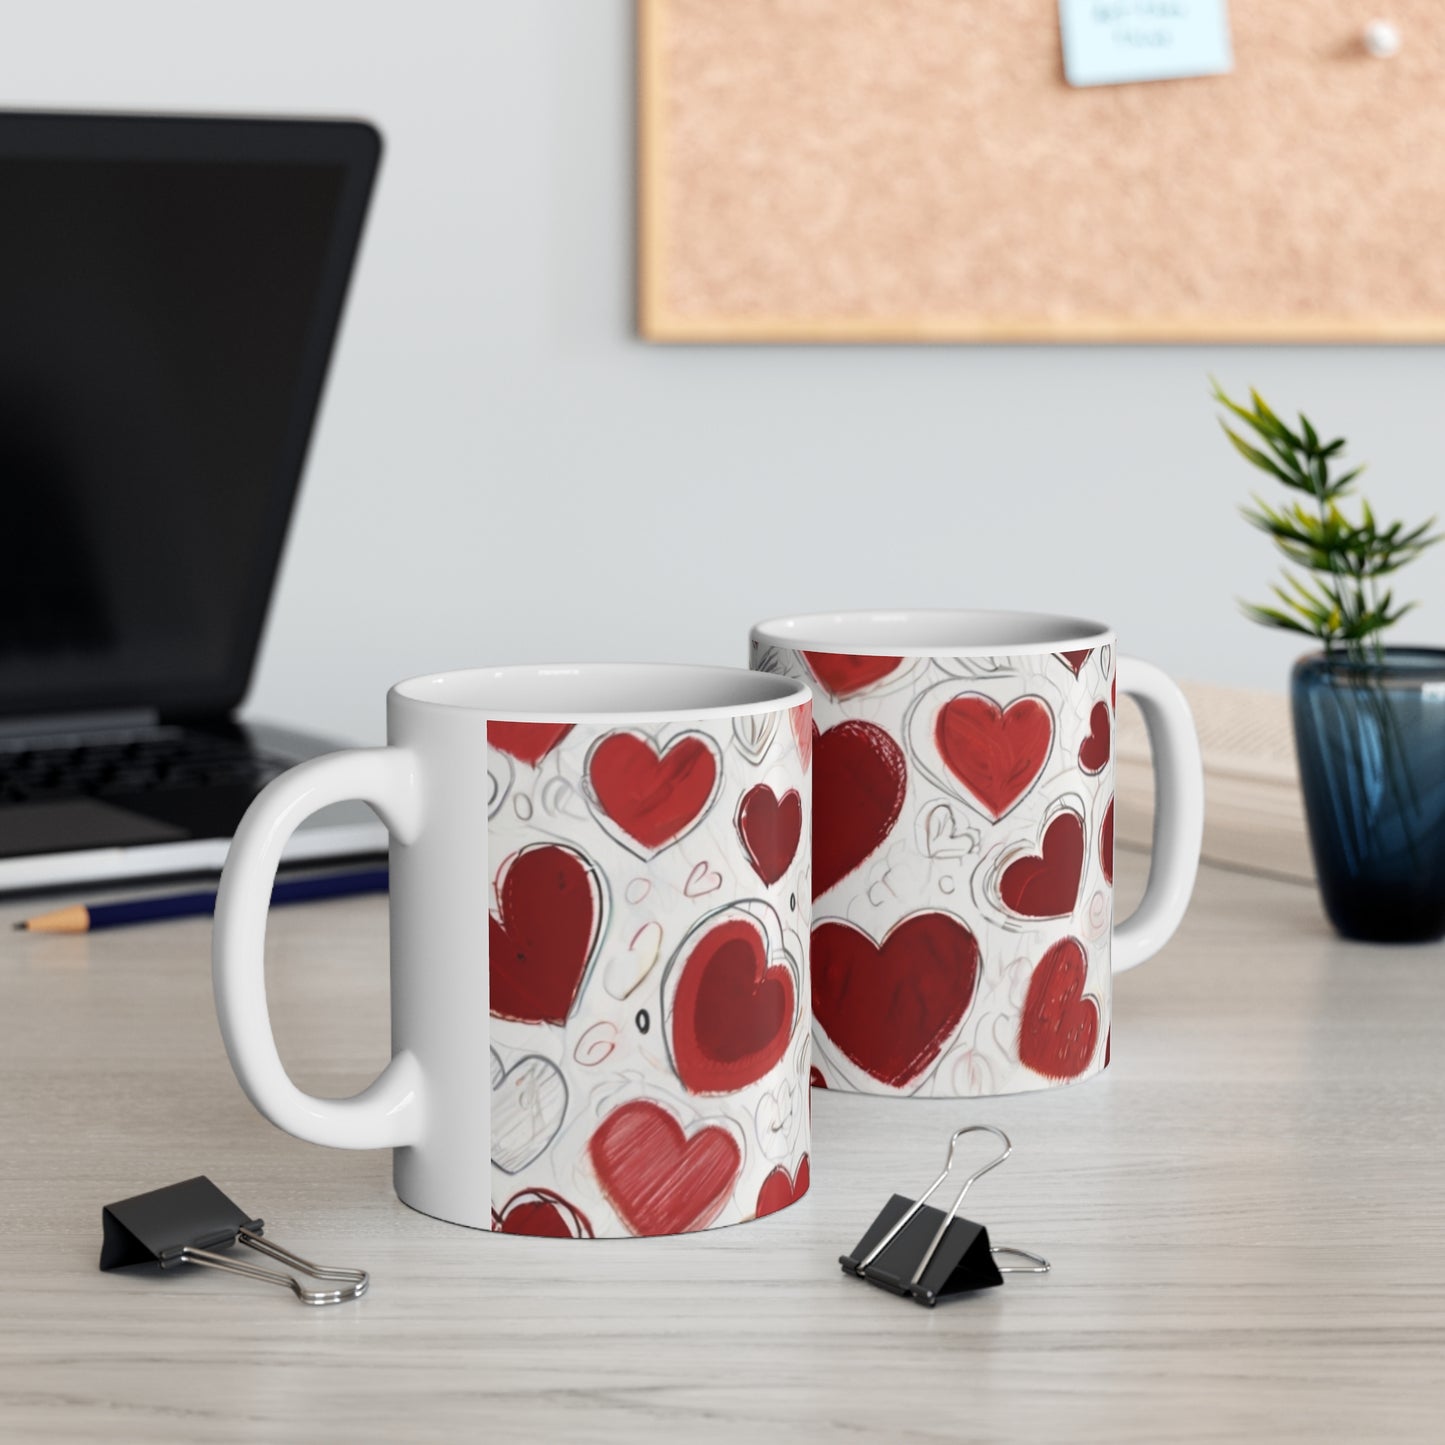 Sketched Red Love Hearts Mug - Ceramic Coffee Mug 11oz